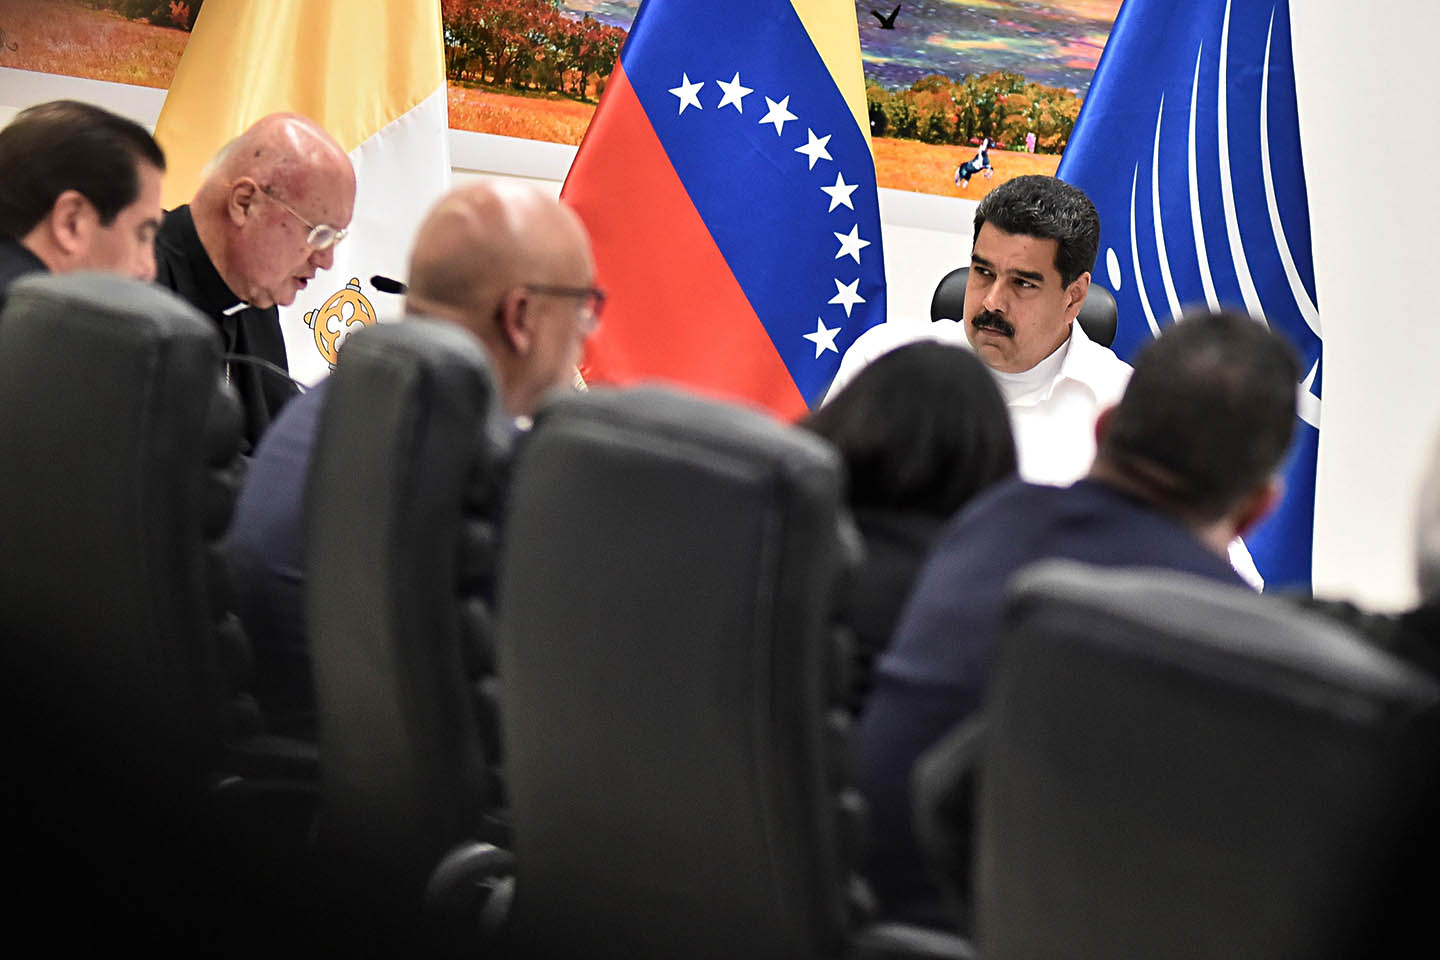 Dialogue between Venezuelan Government and opposition starts in Caracas